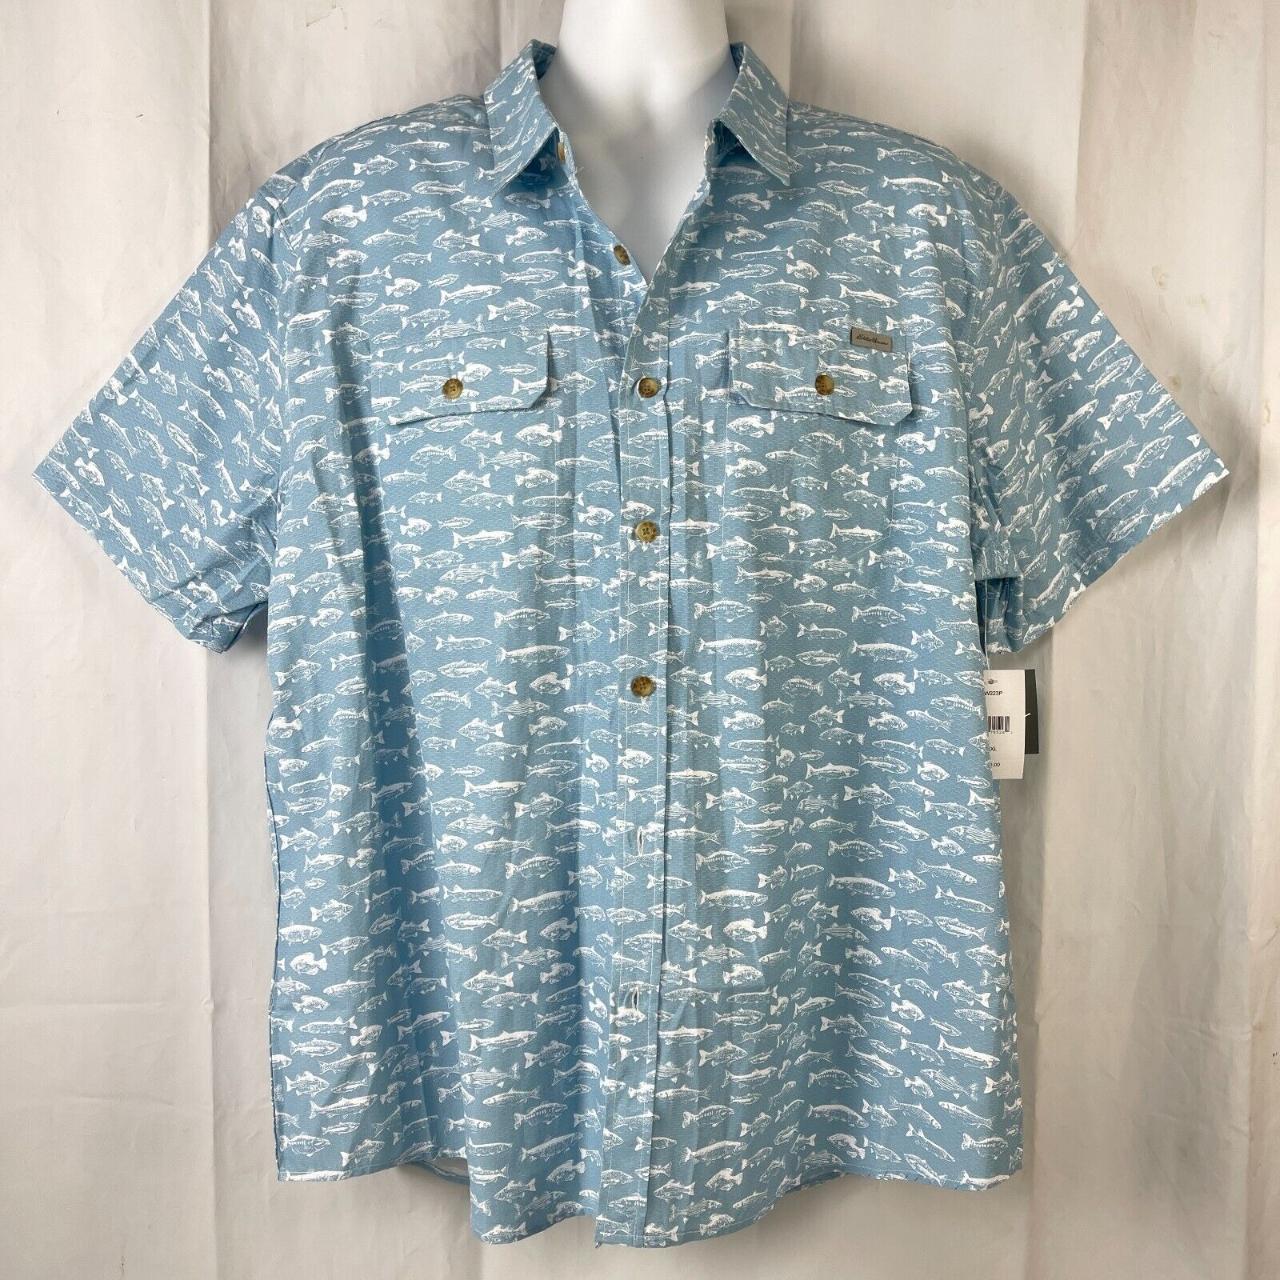 Branded Eddie Bauer Short Sleeve Fishing Shirt White